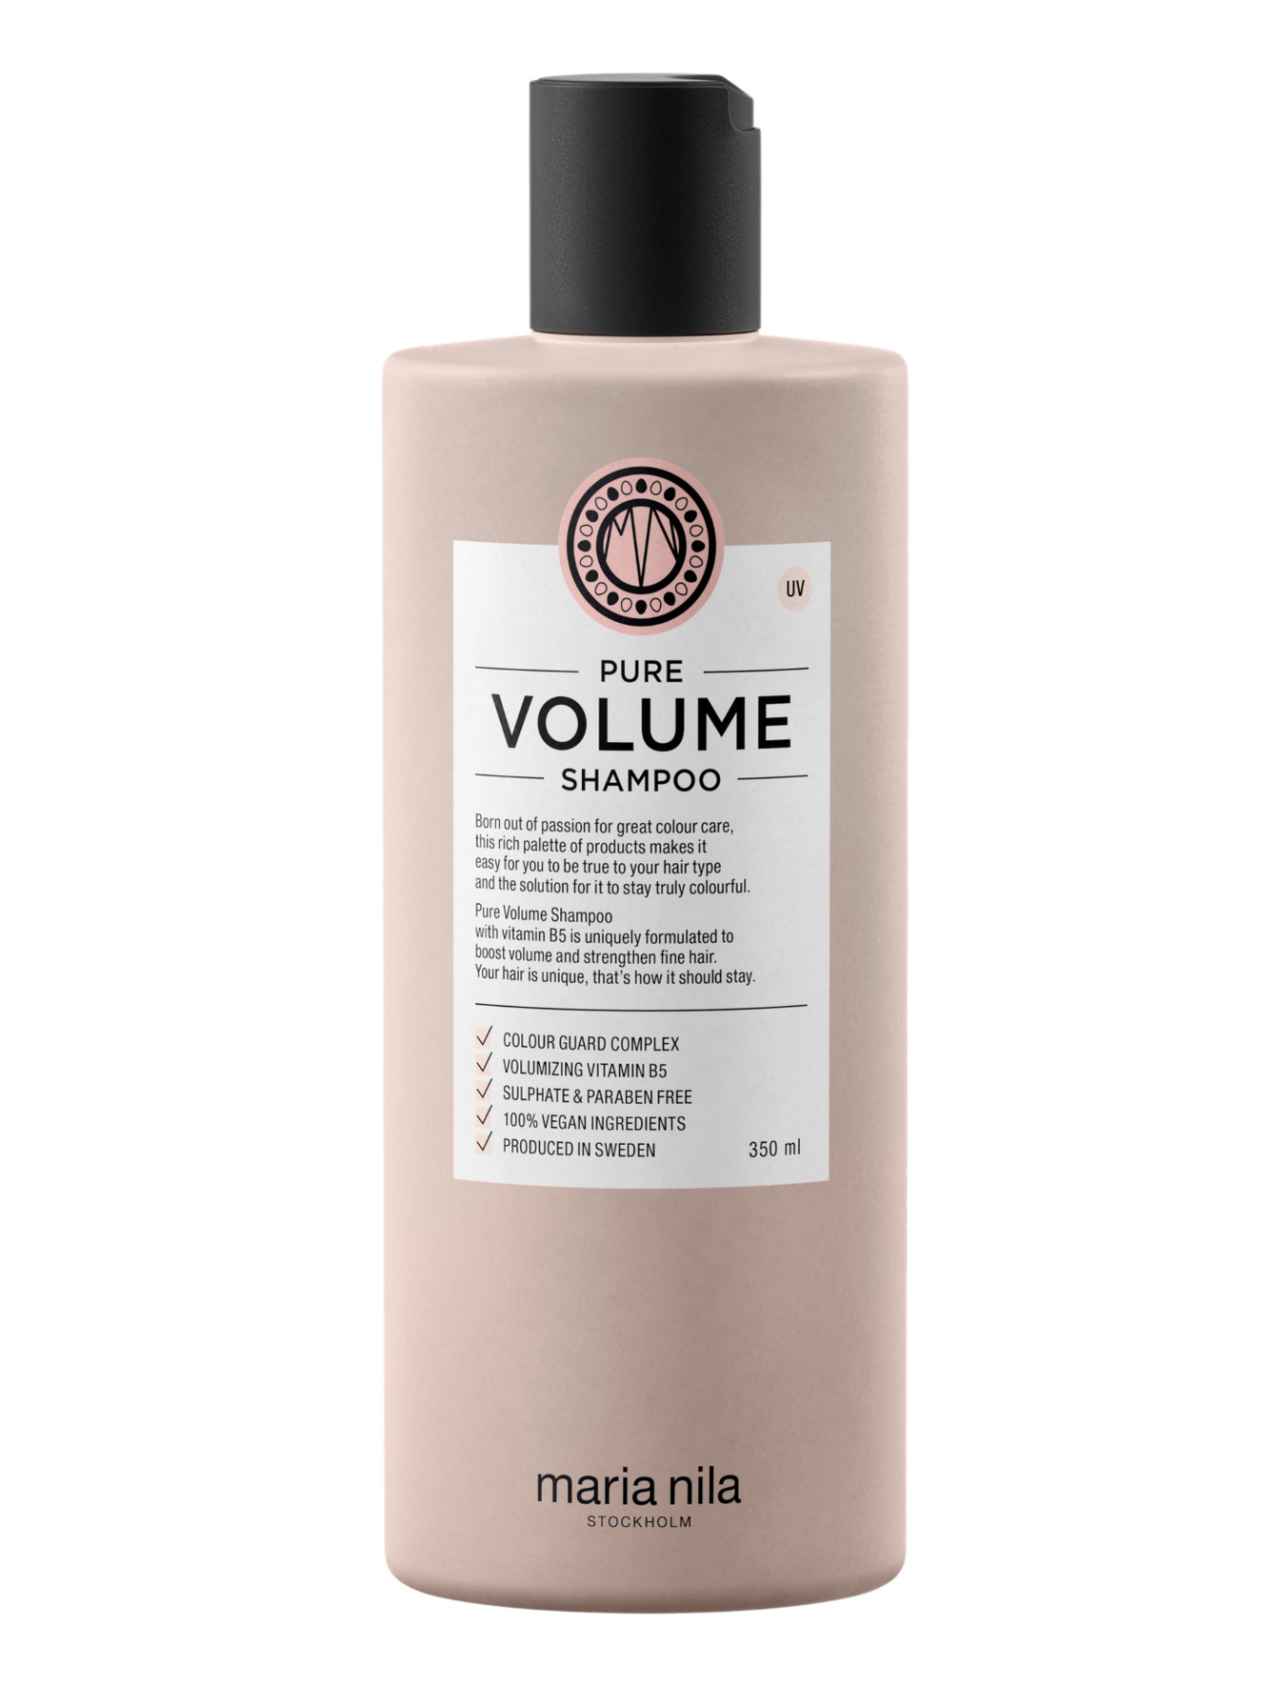 Pure volume shampoo.